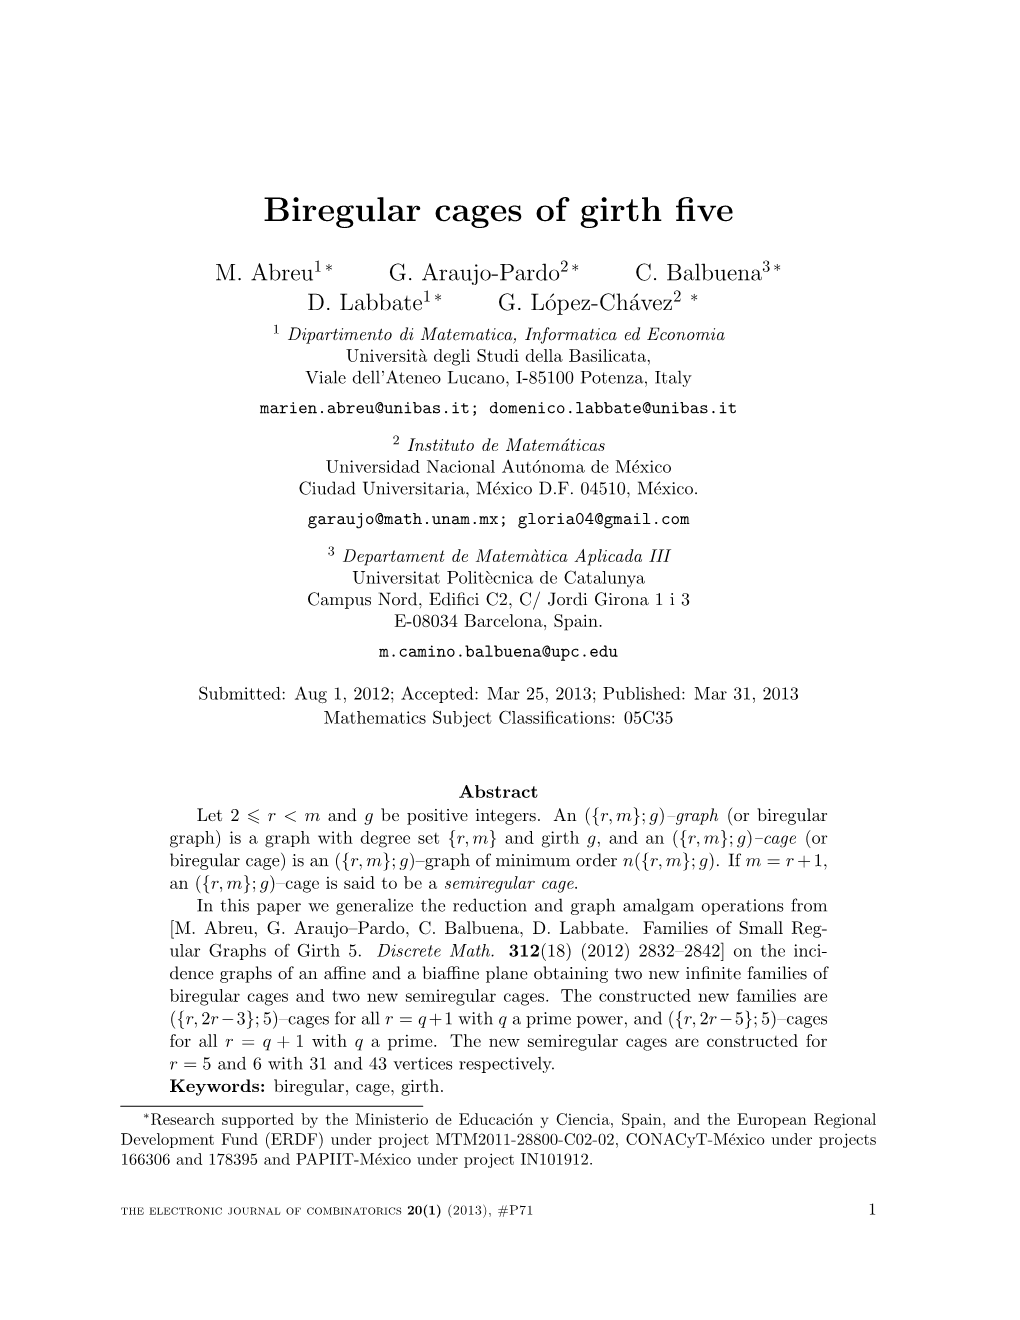 Biregular Cages of Girth Five